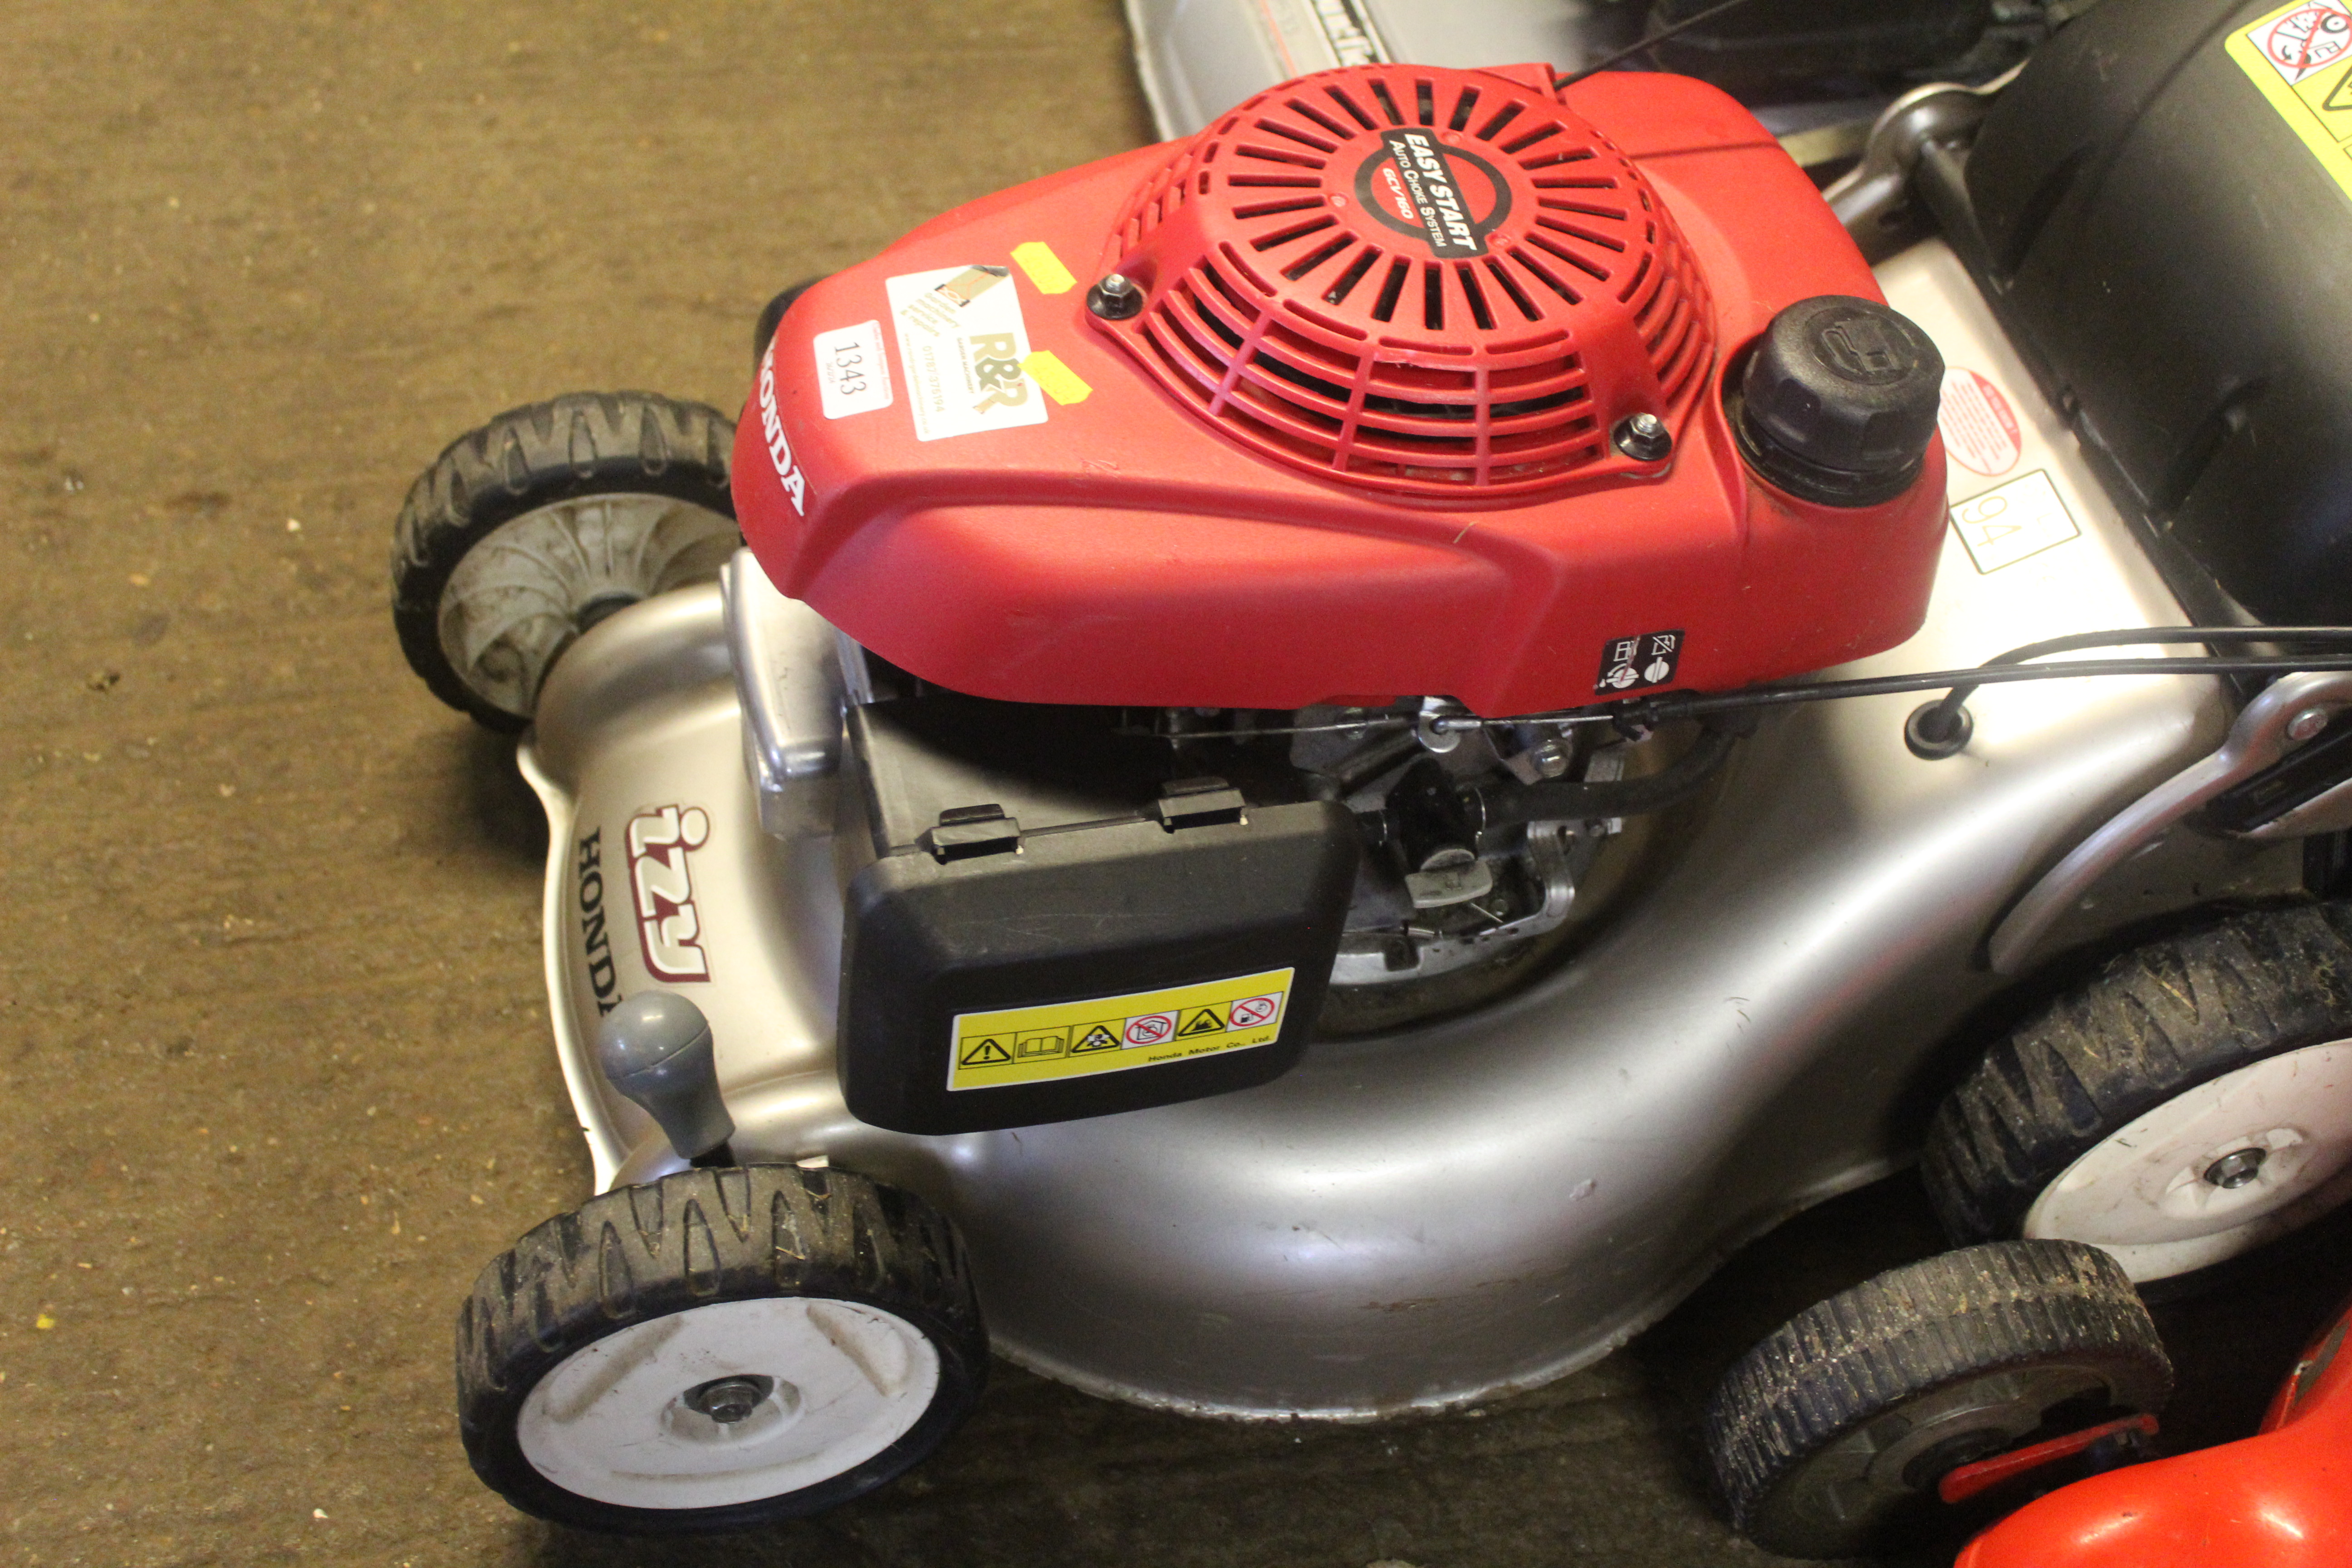 A Honda Izy self-propelled rotary lawn mower with - Bild 3 aus 4